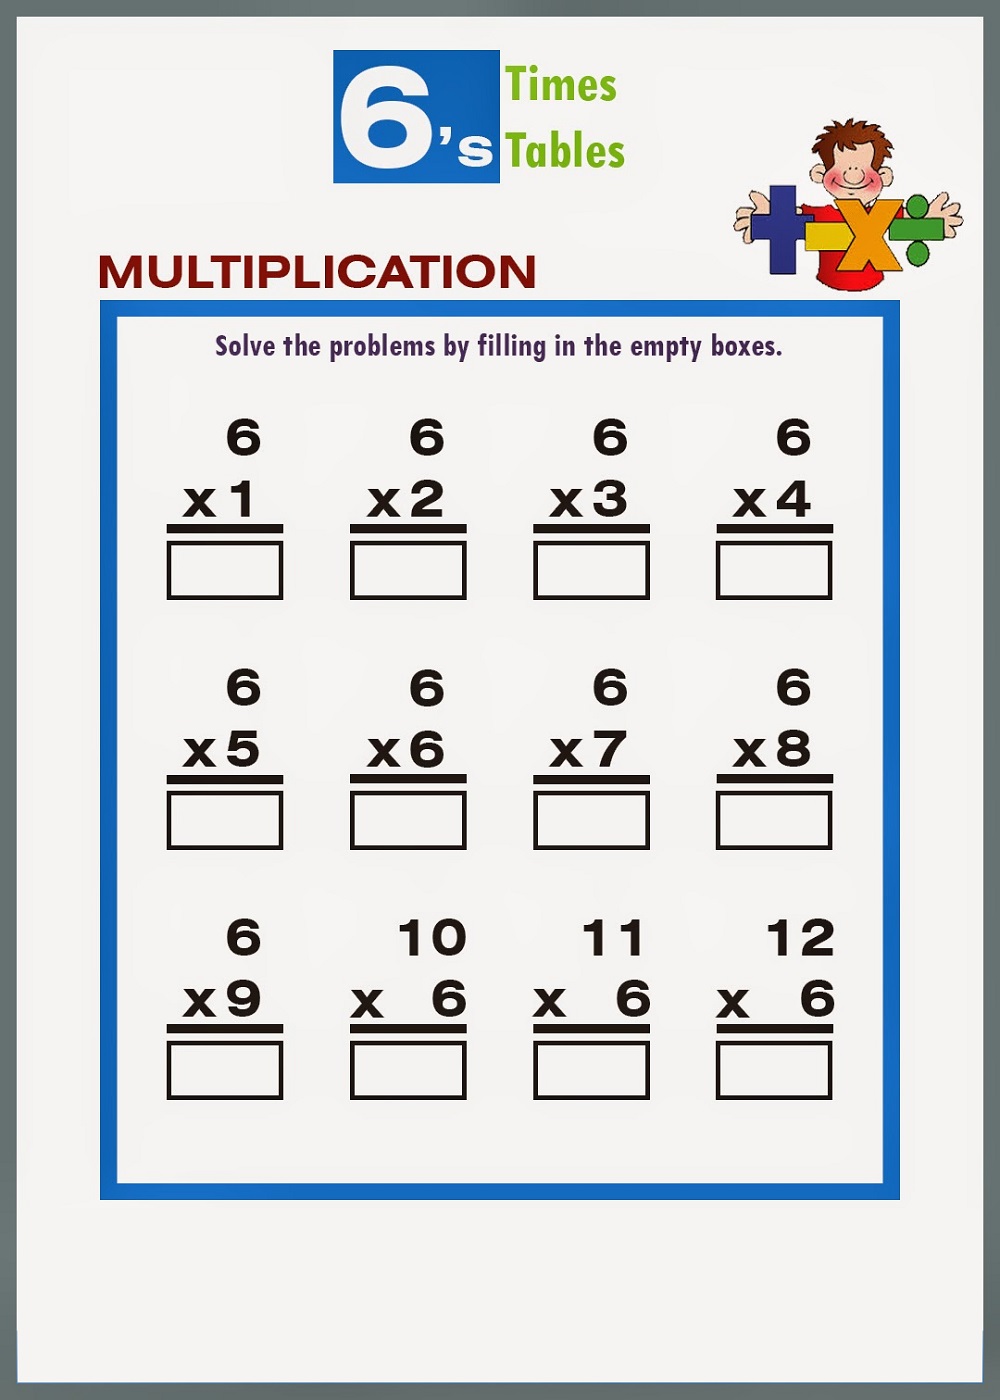 multiplication 6 times table worksheet